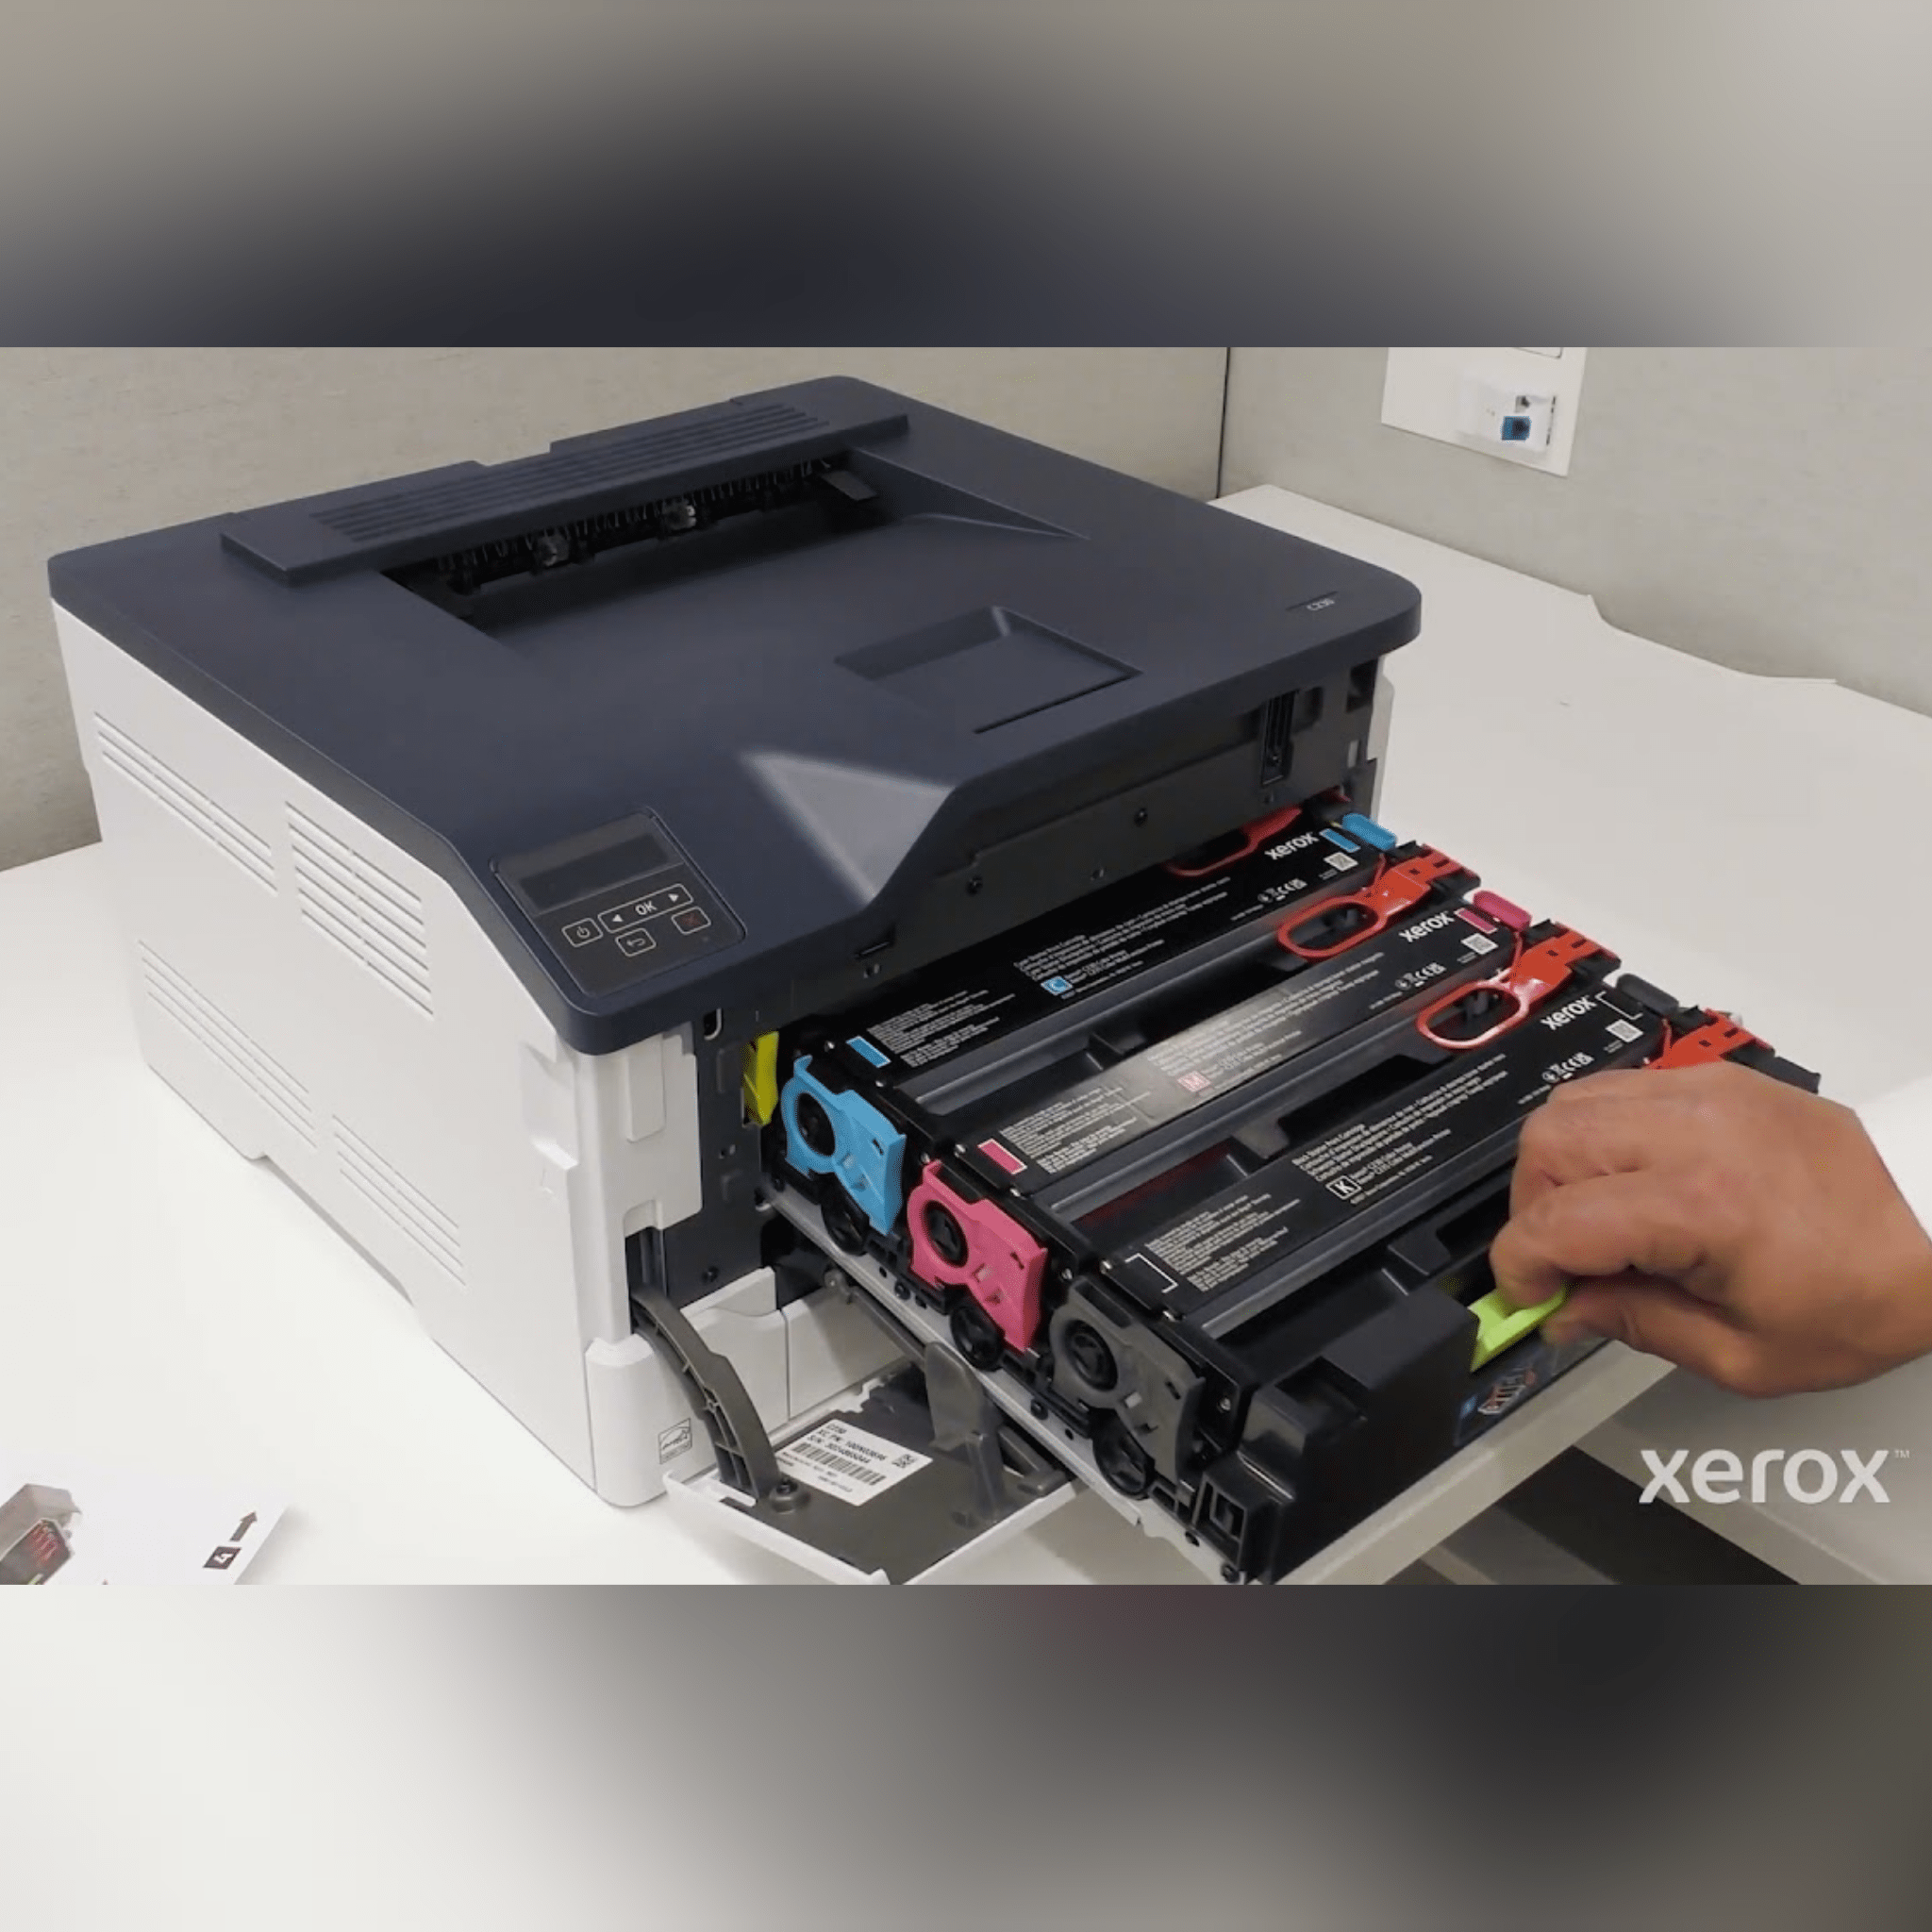 Принтер лазерный Xerox c230. Принтер лазерный Xerox c230 картридж. Принтер Xerox c230v_dni. Лазерный принтер (цветной) Xerox c230. 006r04387